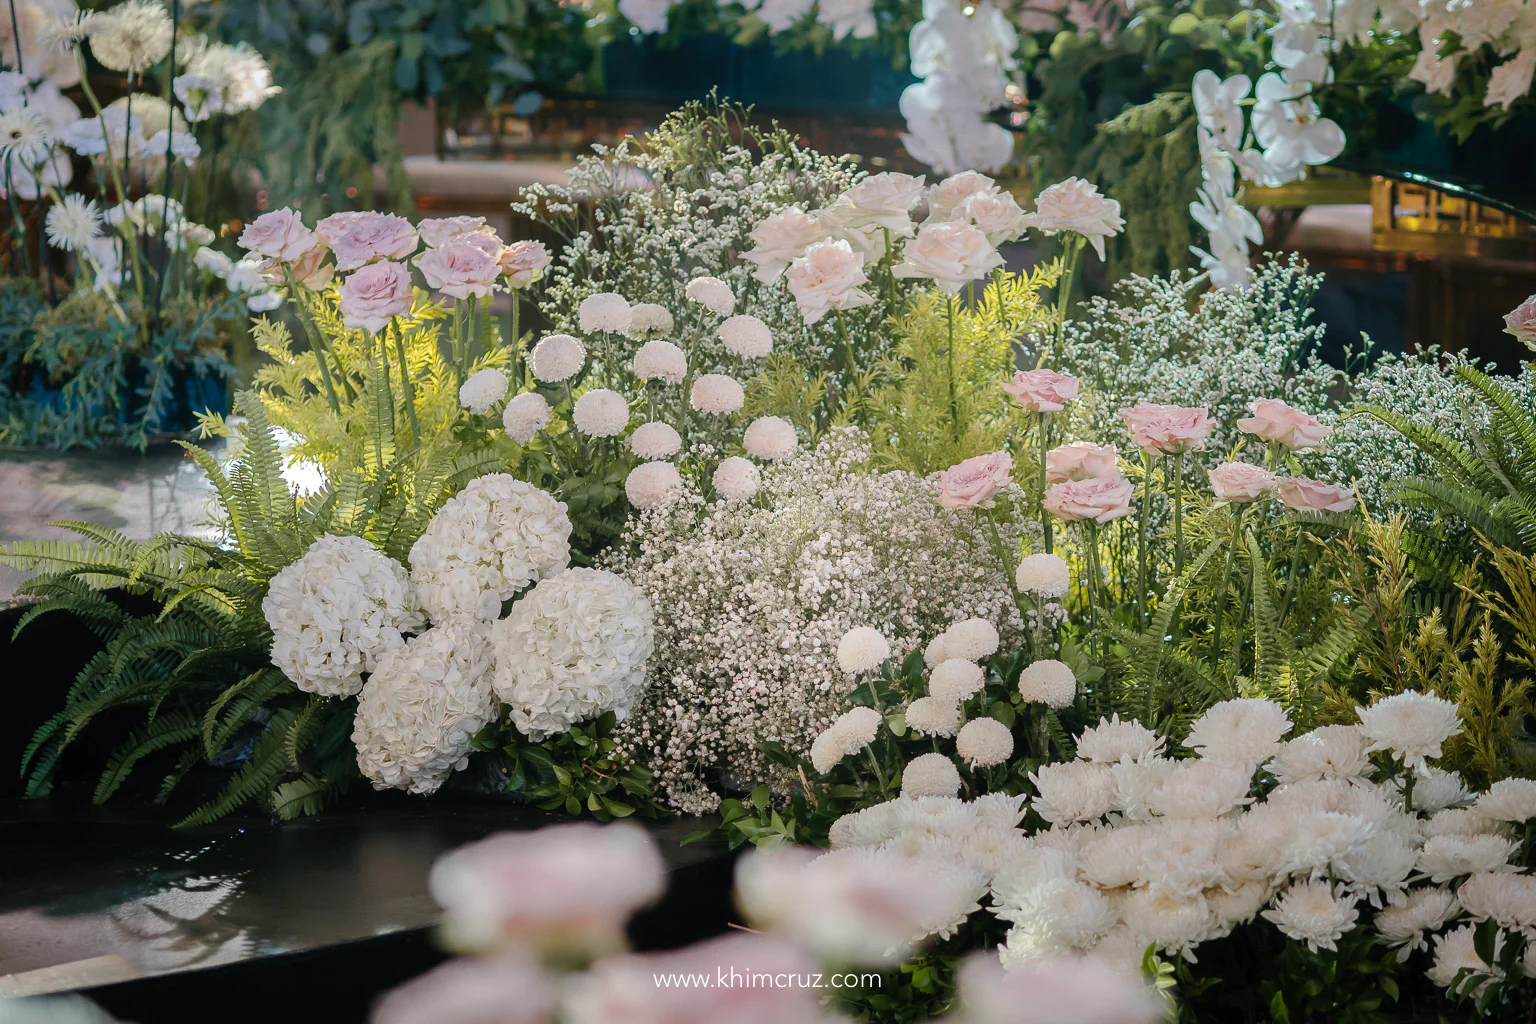 fresh flowers for a dreamy conservatory-inspired wedding reception by Khim Cruz